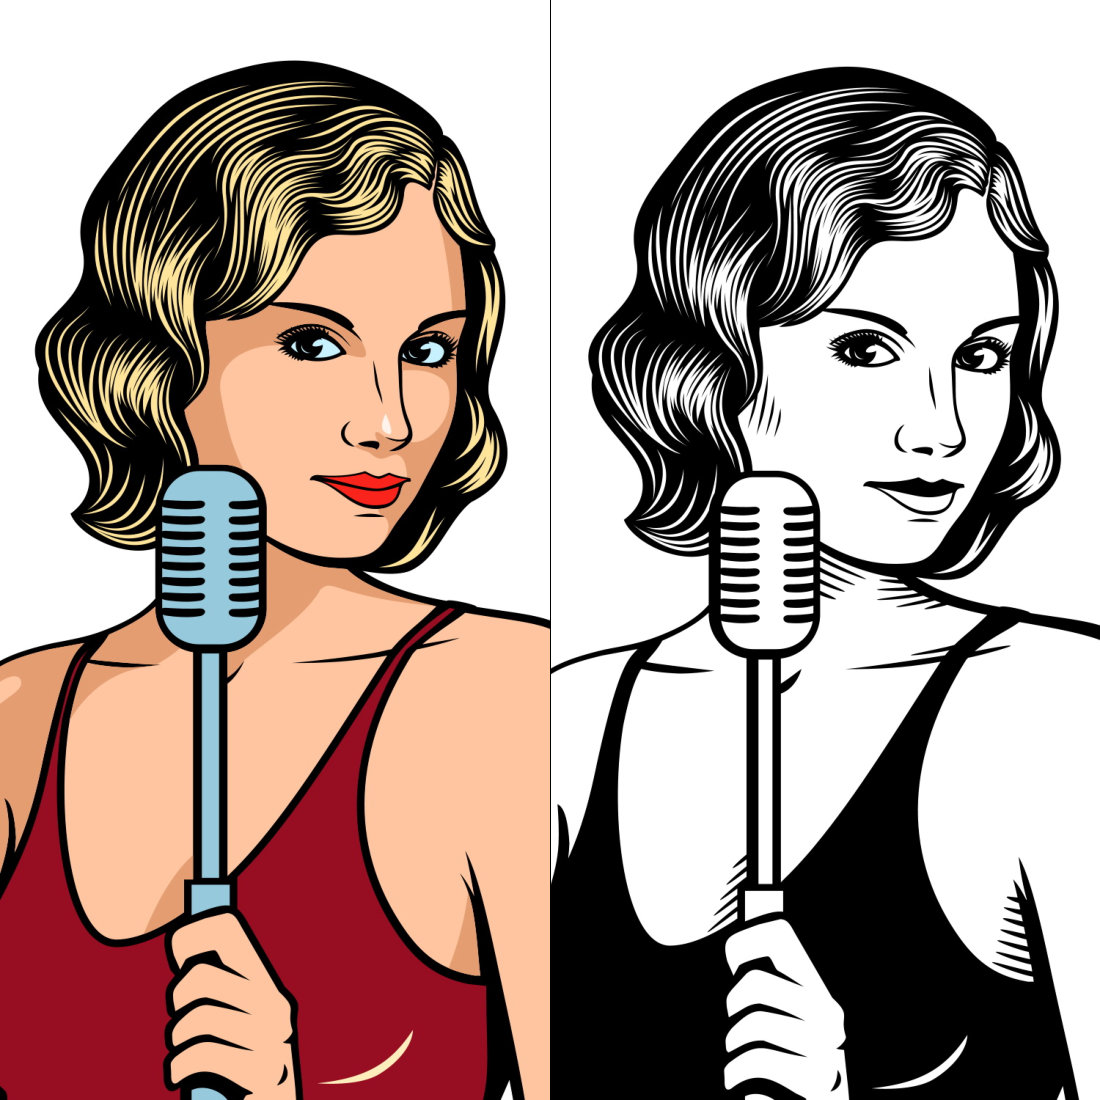 Jazz Singer Girl Character Design preview image.